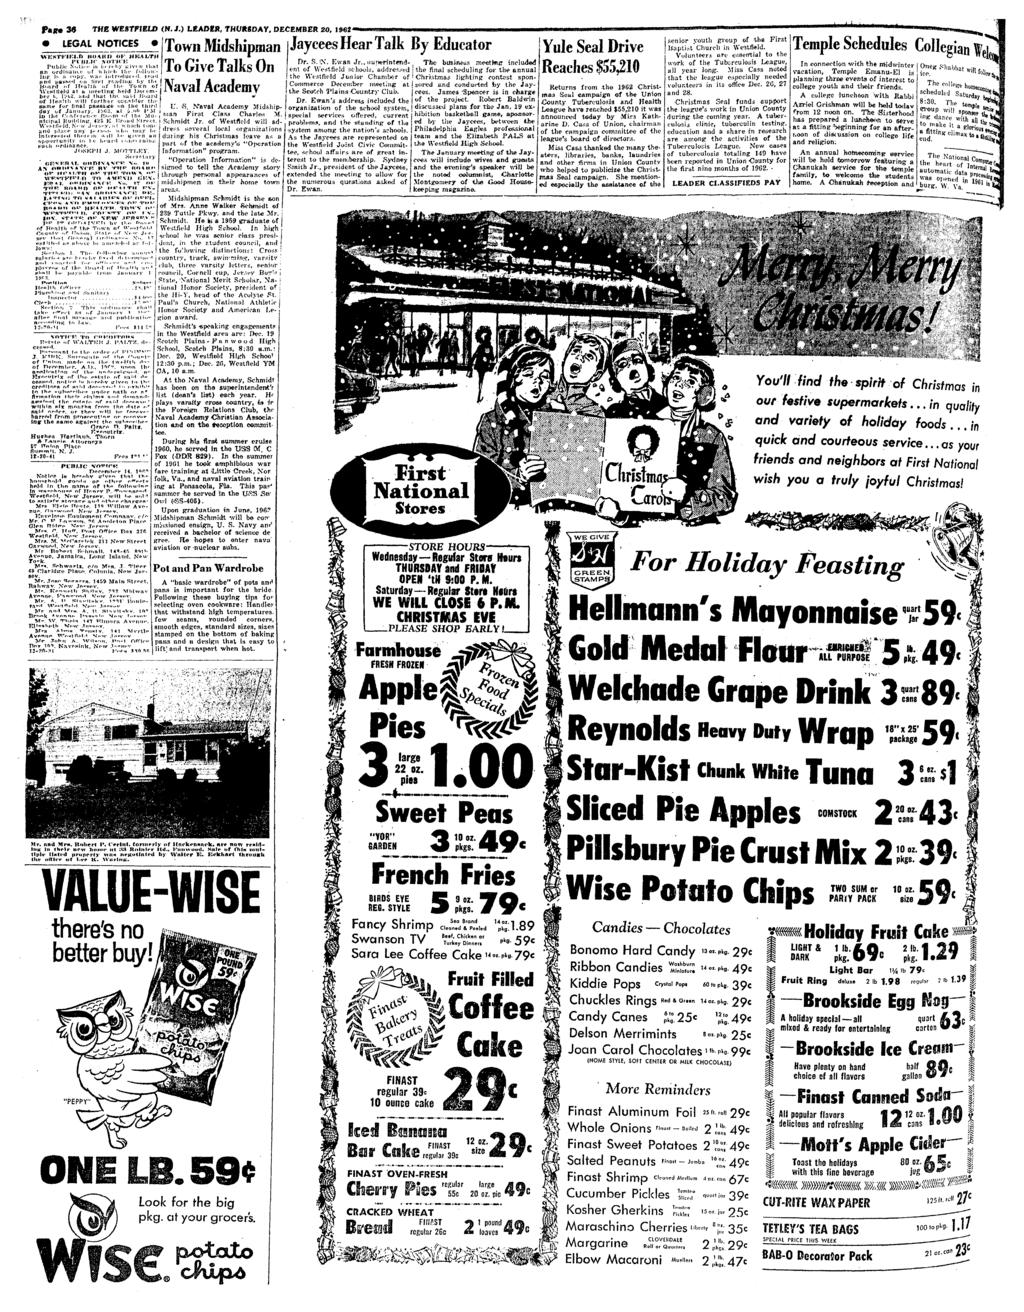 F«J» 3$ THE WE8TFIELD (N. J.) LEADKR, THURSDAY, DECEMBER 20, 1962' LEGAL NOTICES BOAHO «! ' HKALfH PMII.JC \orr: Publc N-l--' s :. n-.y uvn tl.